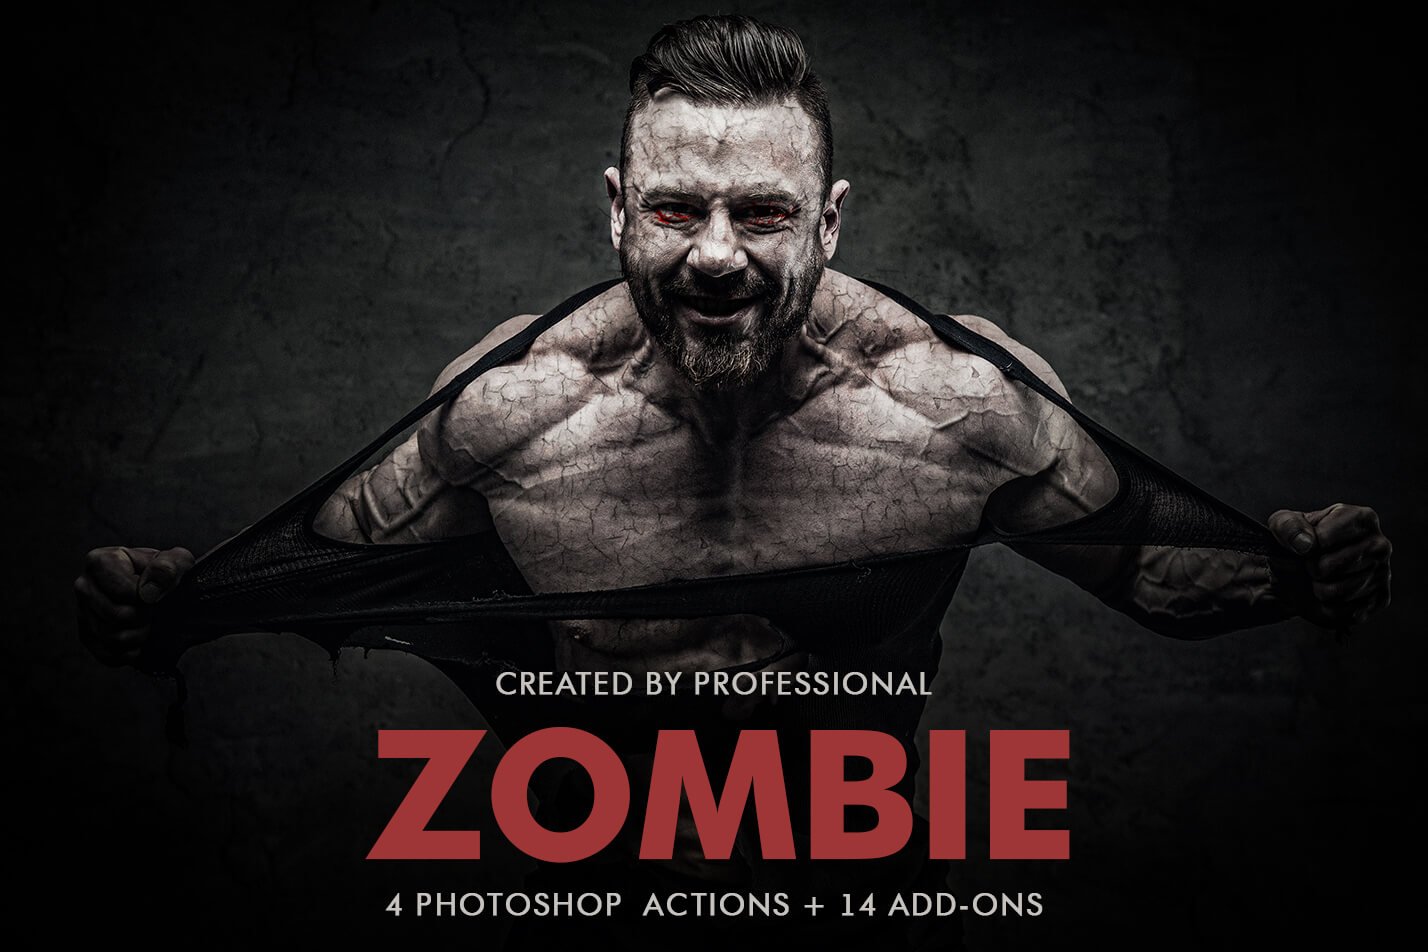 Zombie Photoshop Actionscover image.